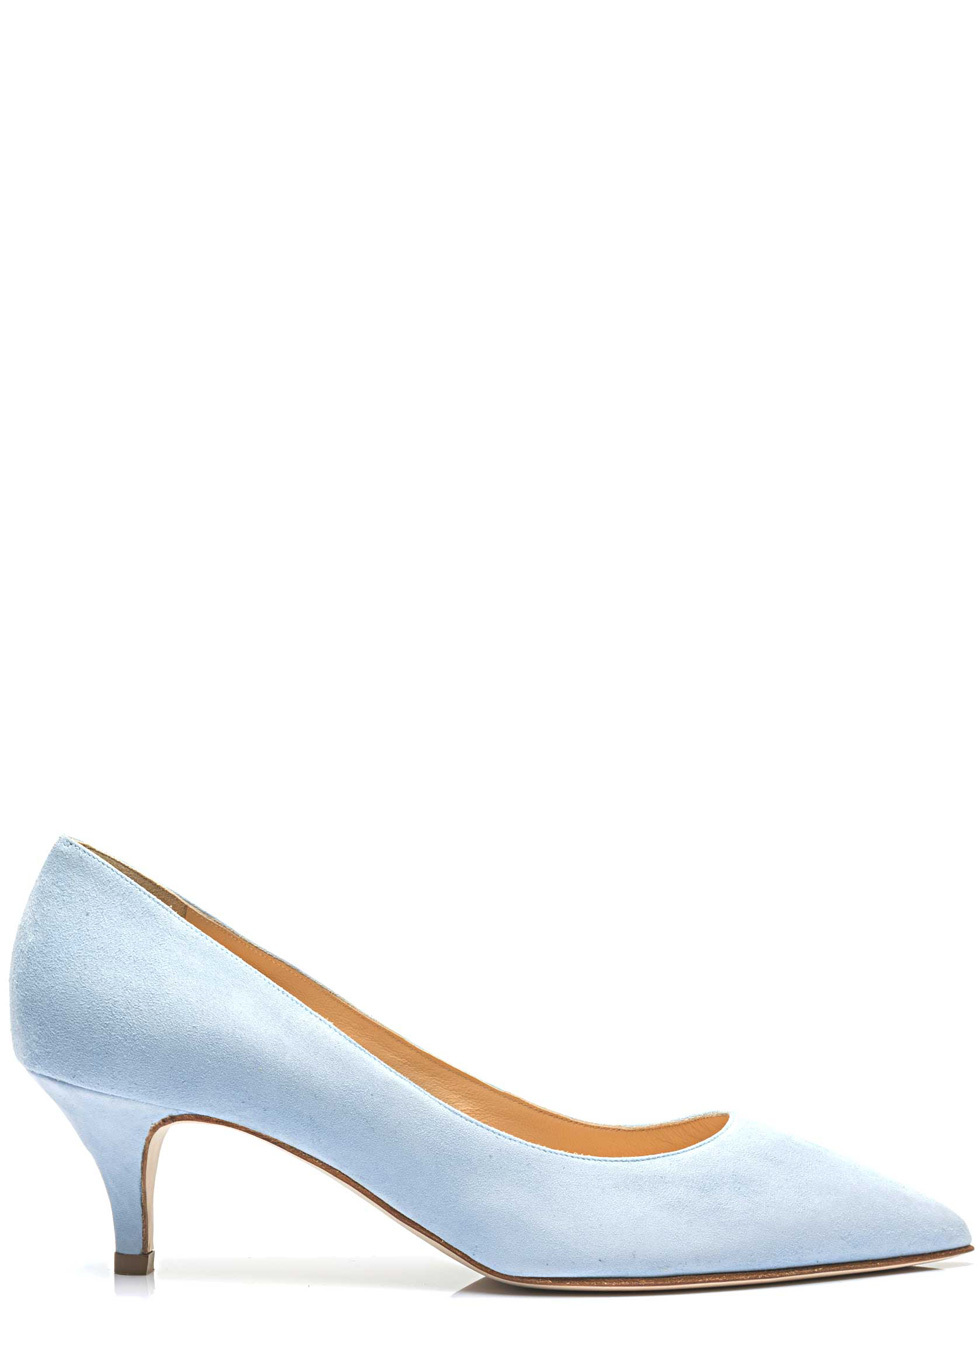 blue suede kitten heel shoes